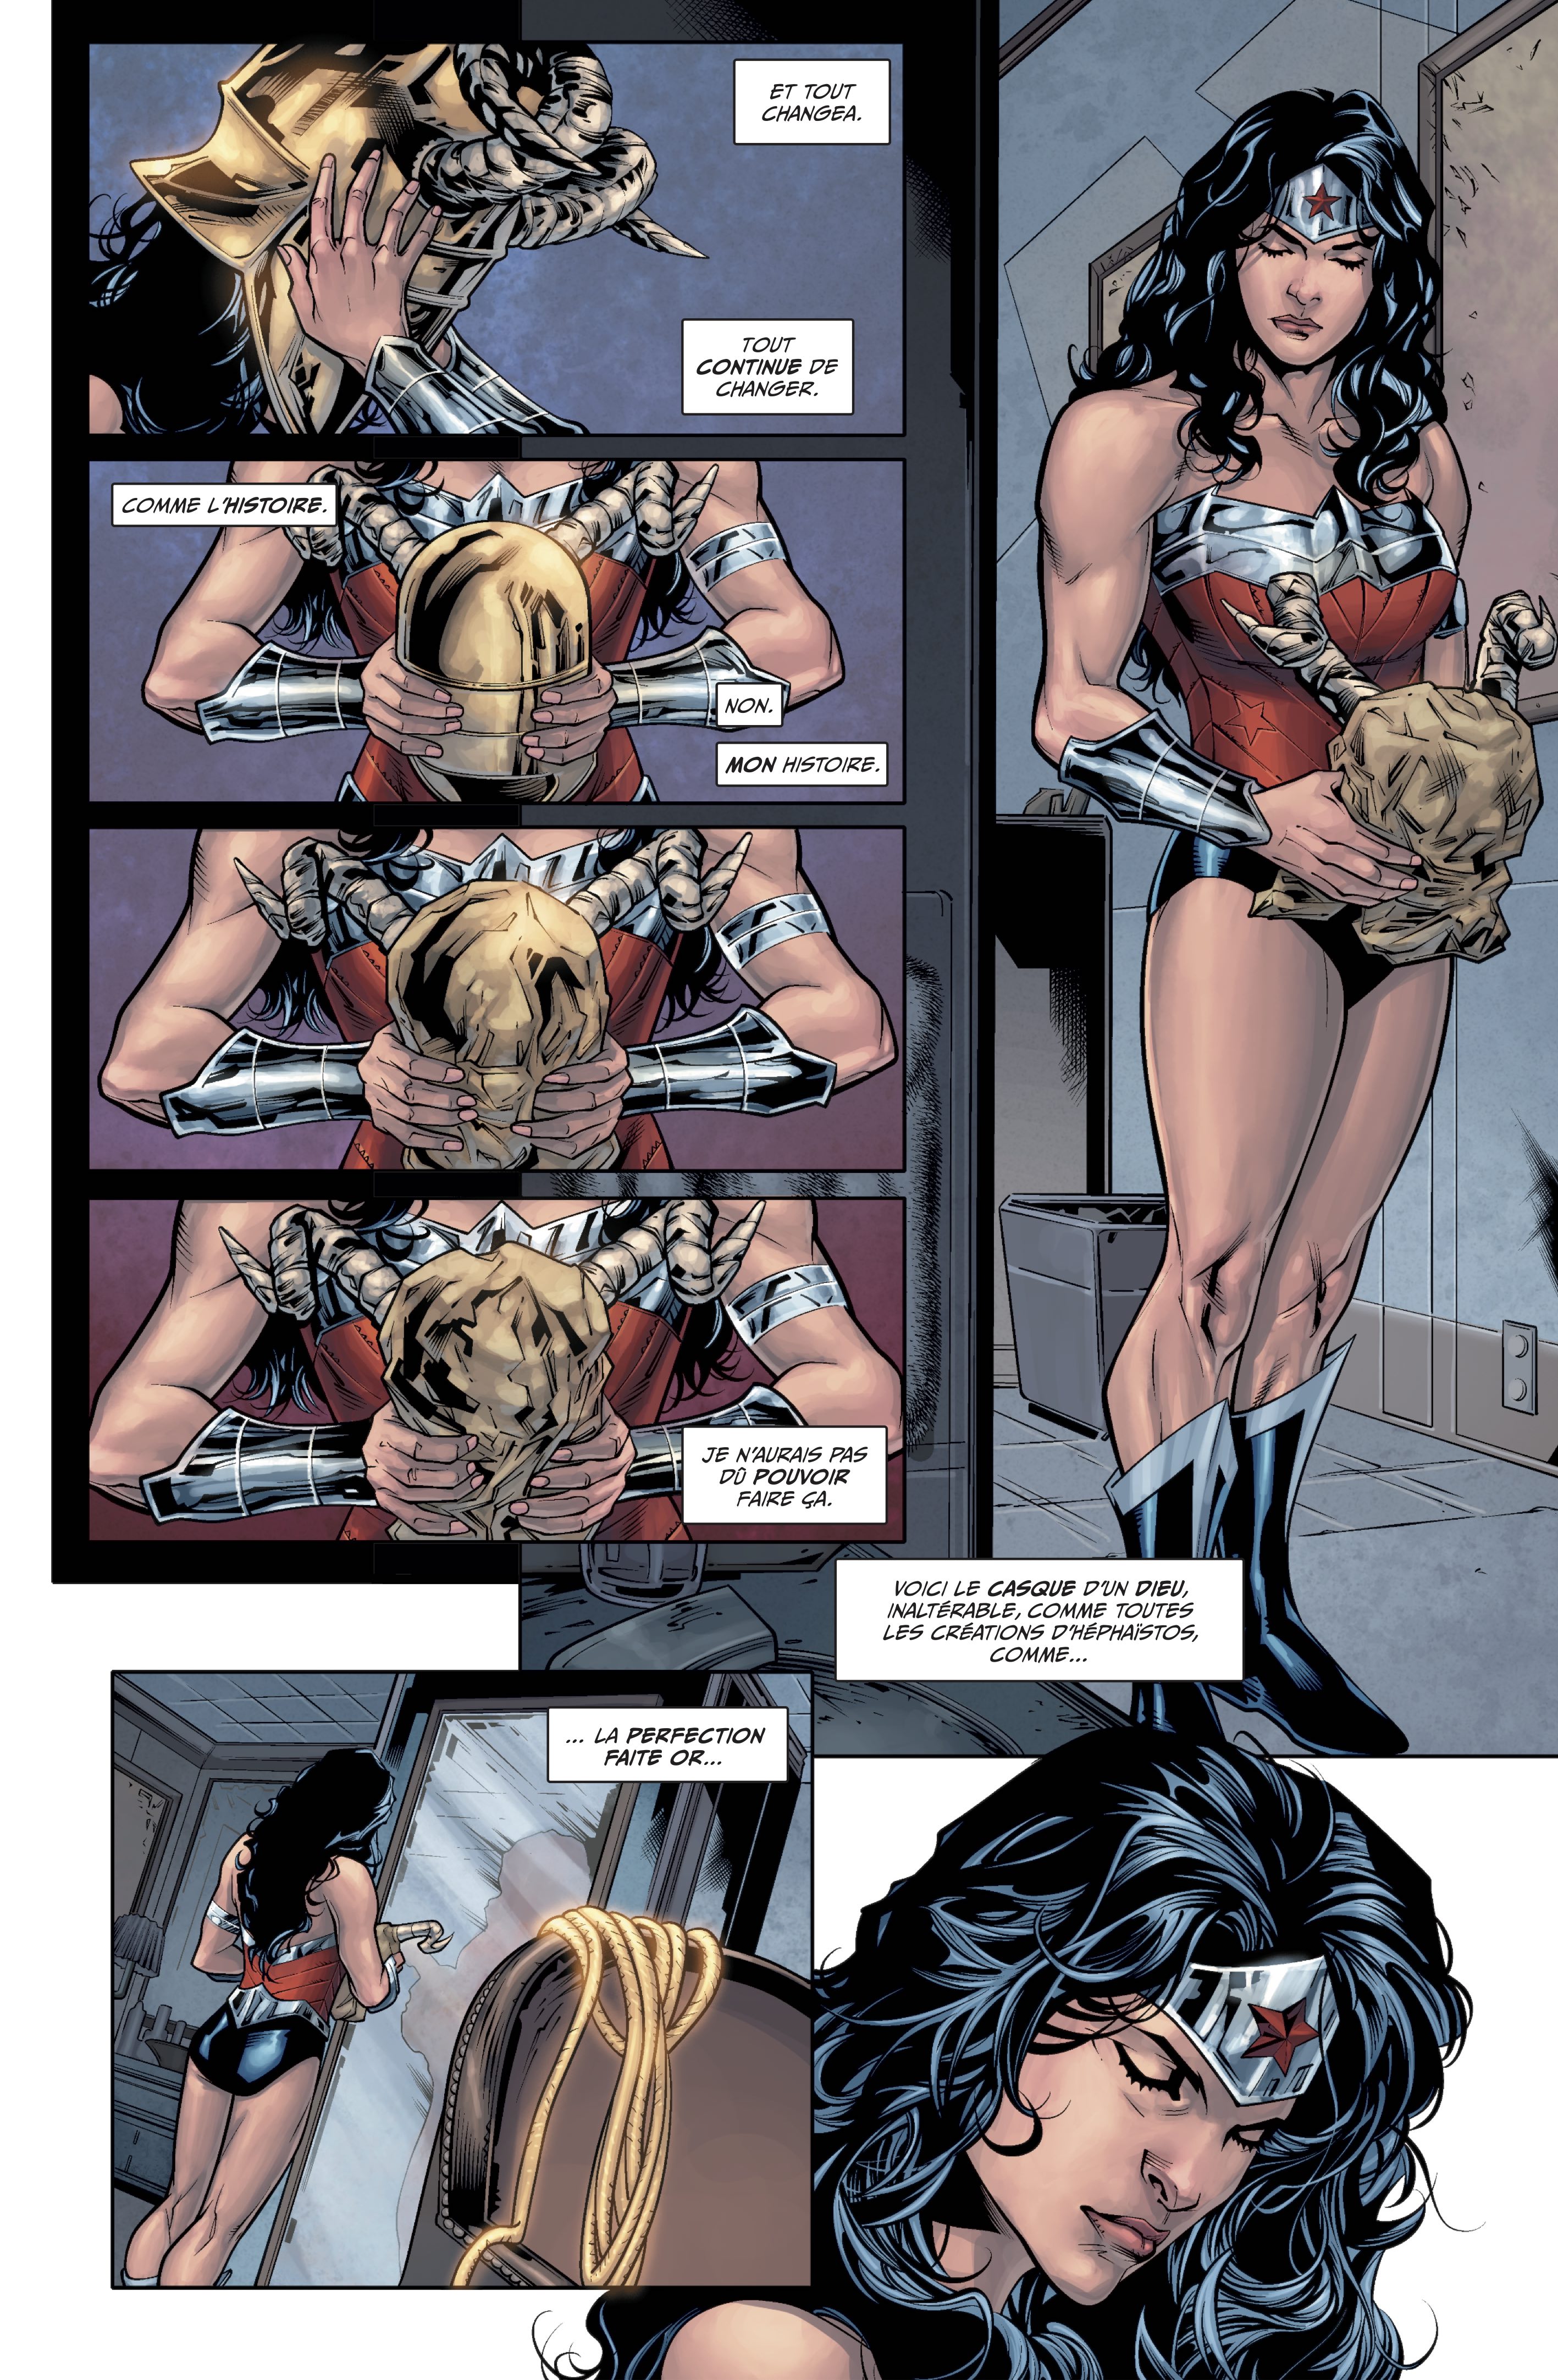 Rebirth Wonder Woman